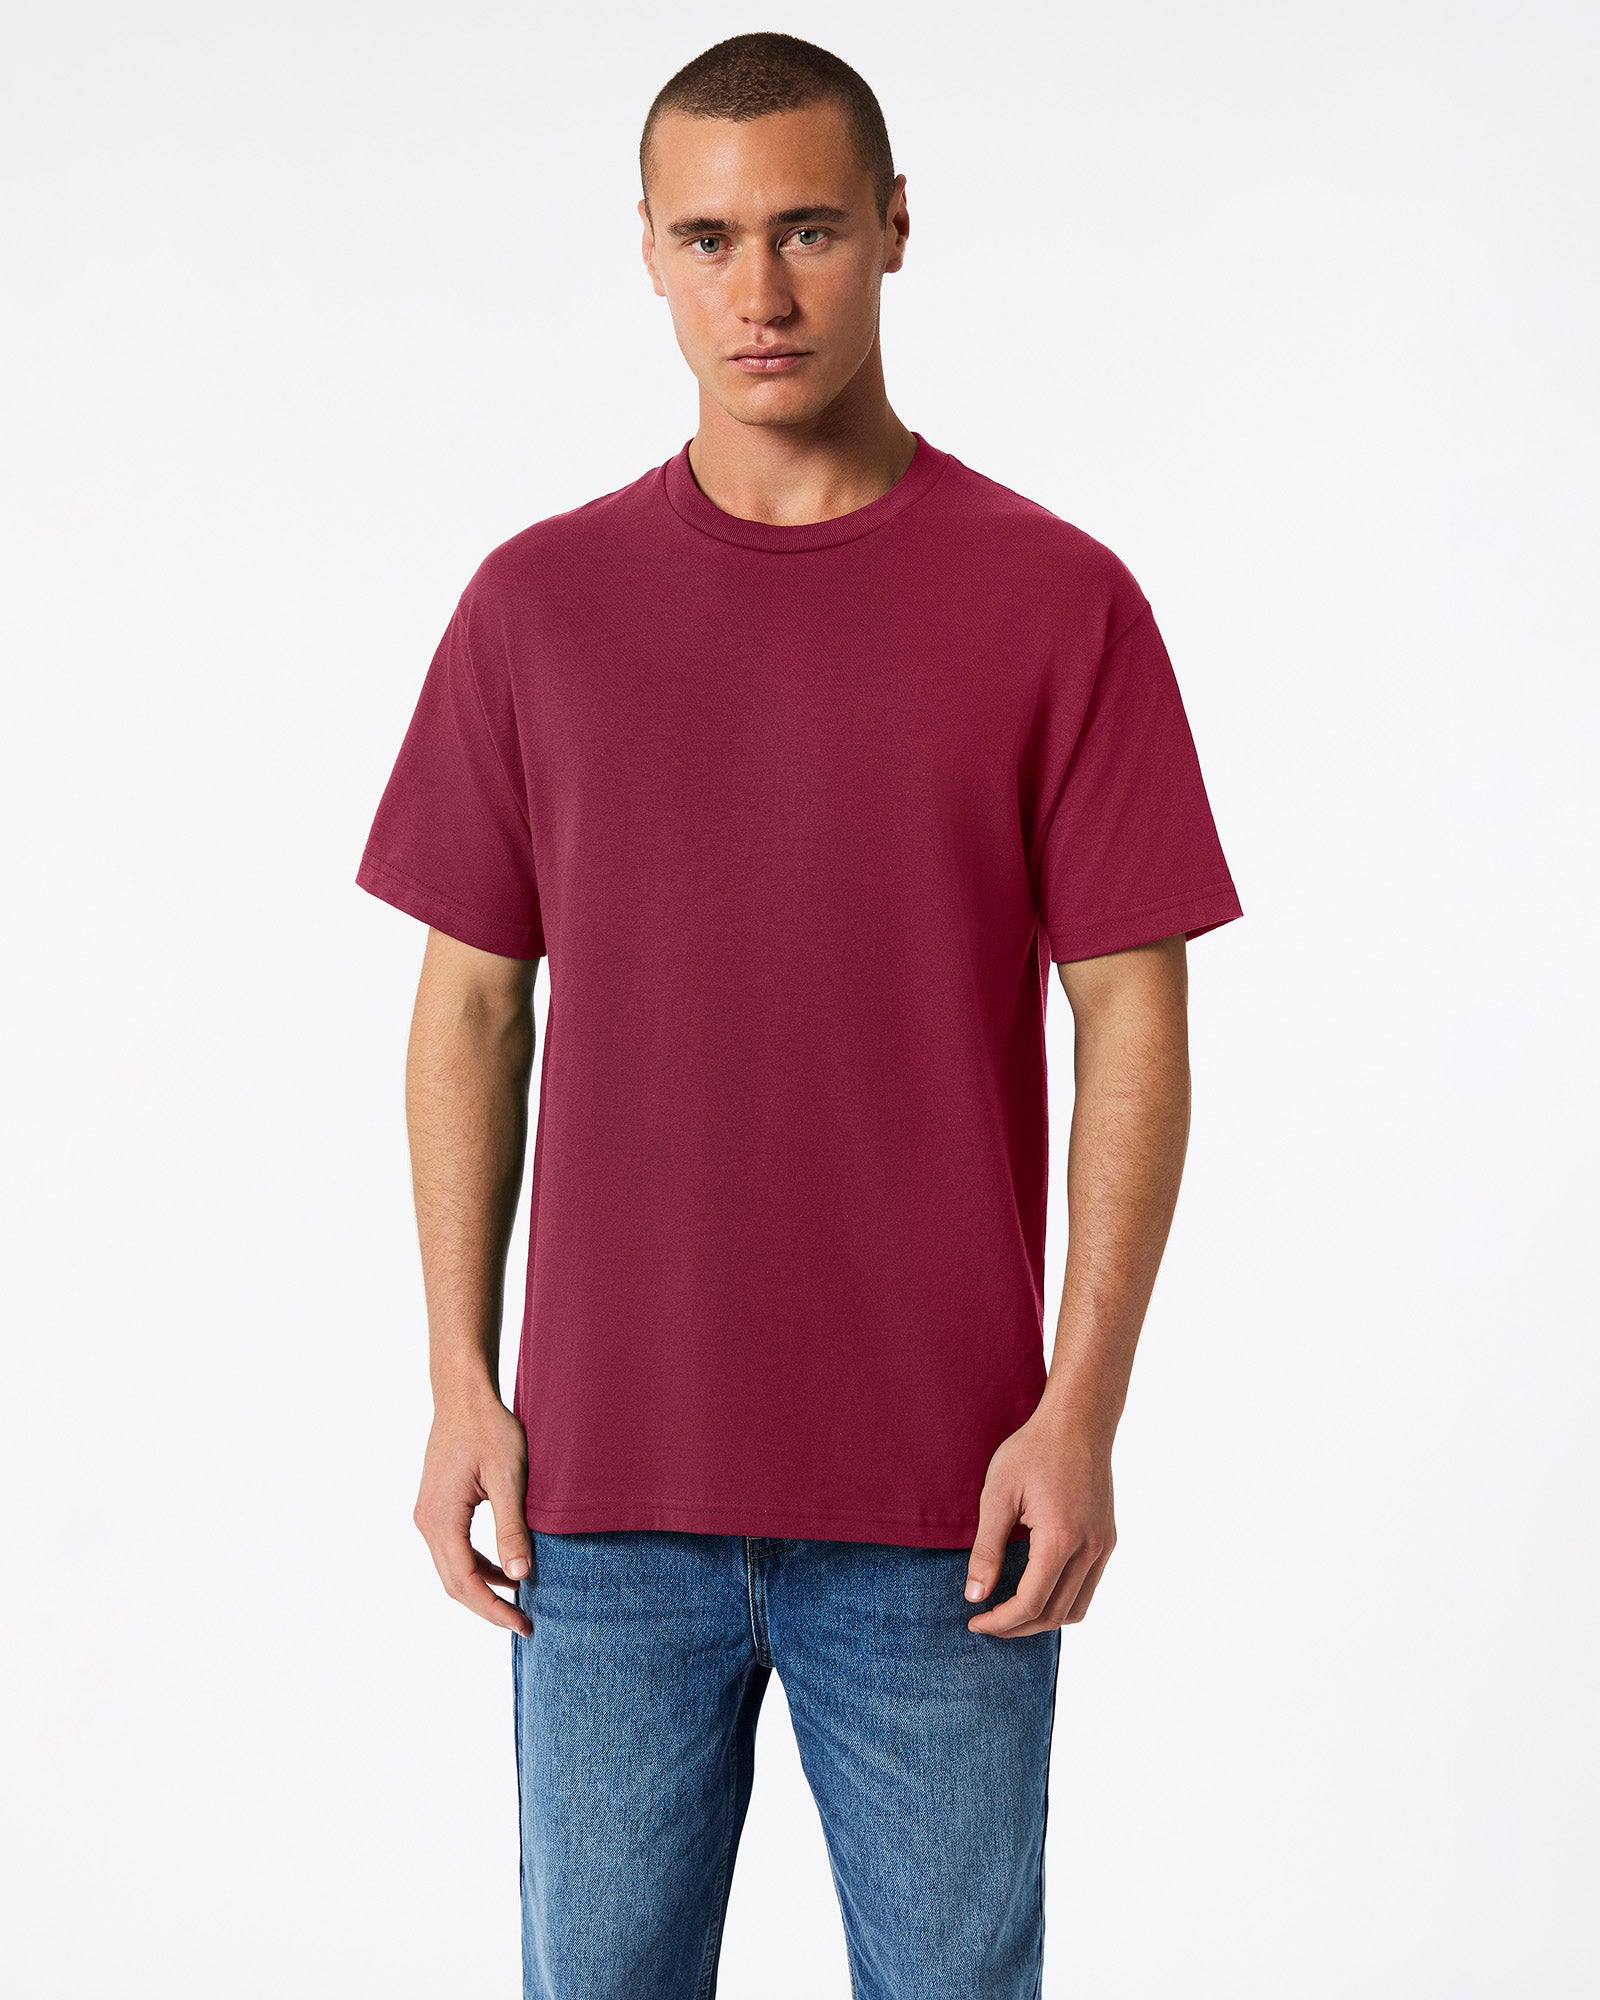 Heavyweight Unisex T-Shirt - Burgundy